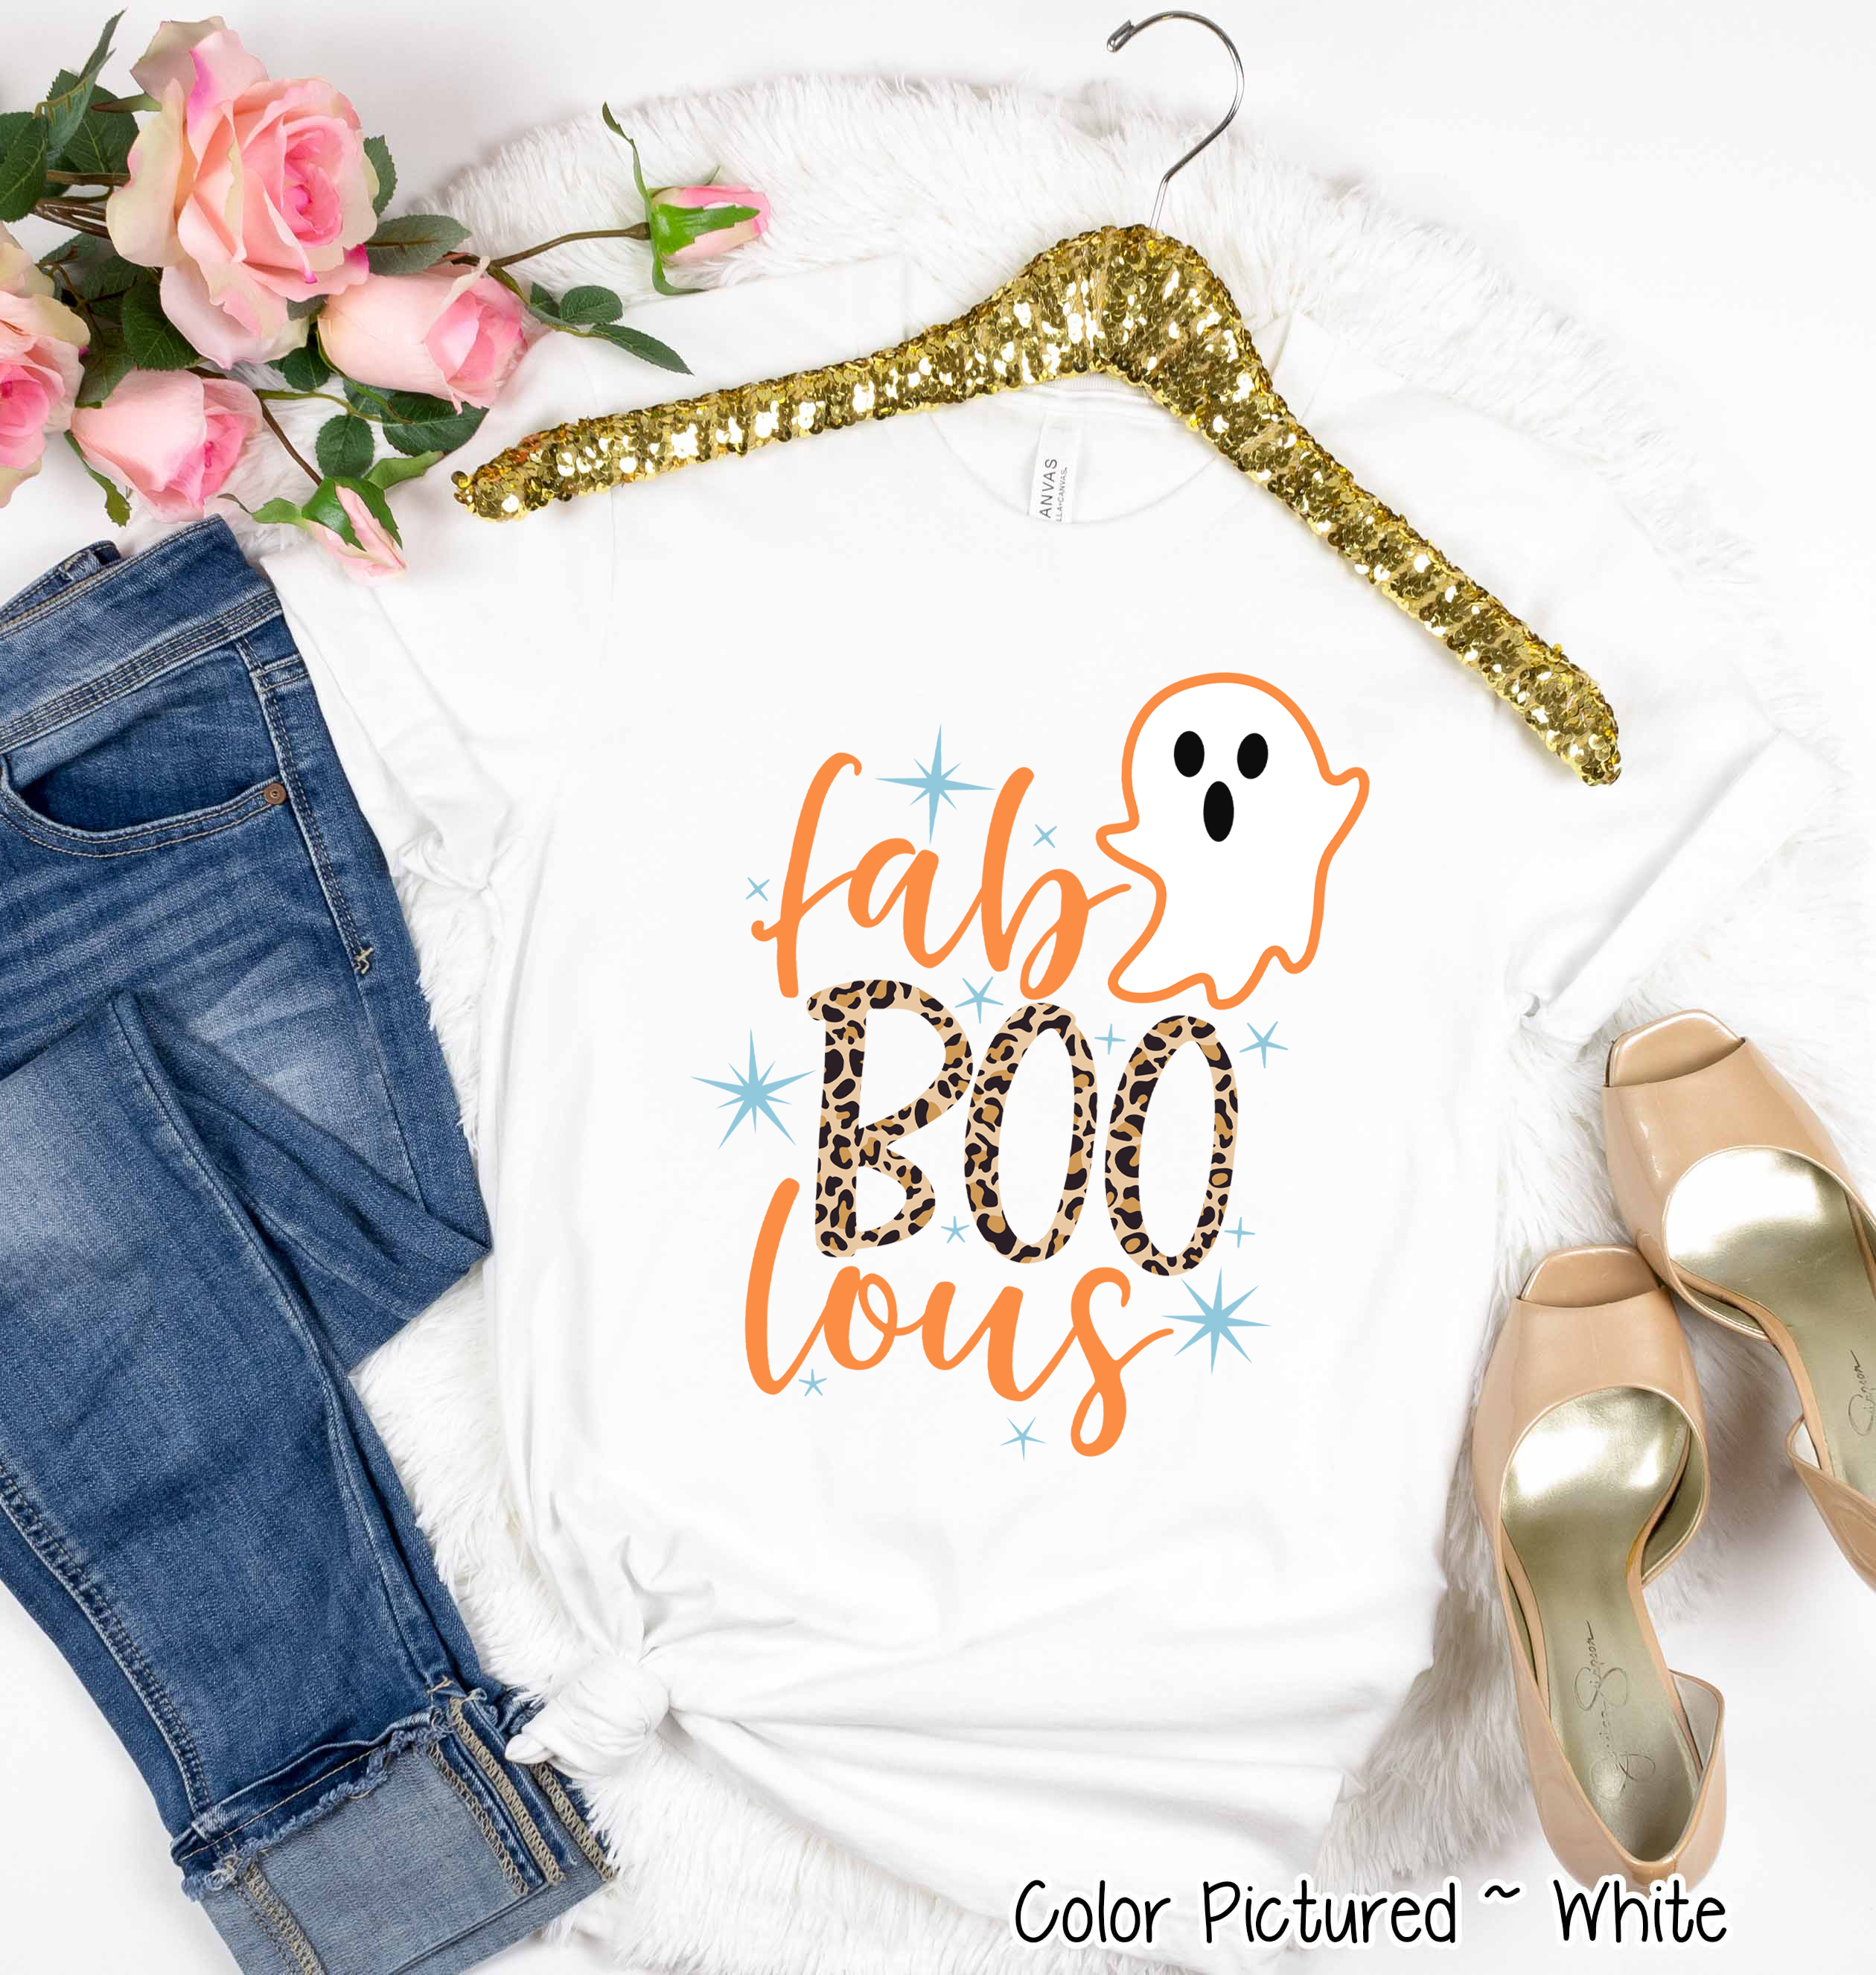 Fab Boo Lous Halloween Boo Shirt